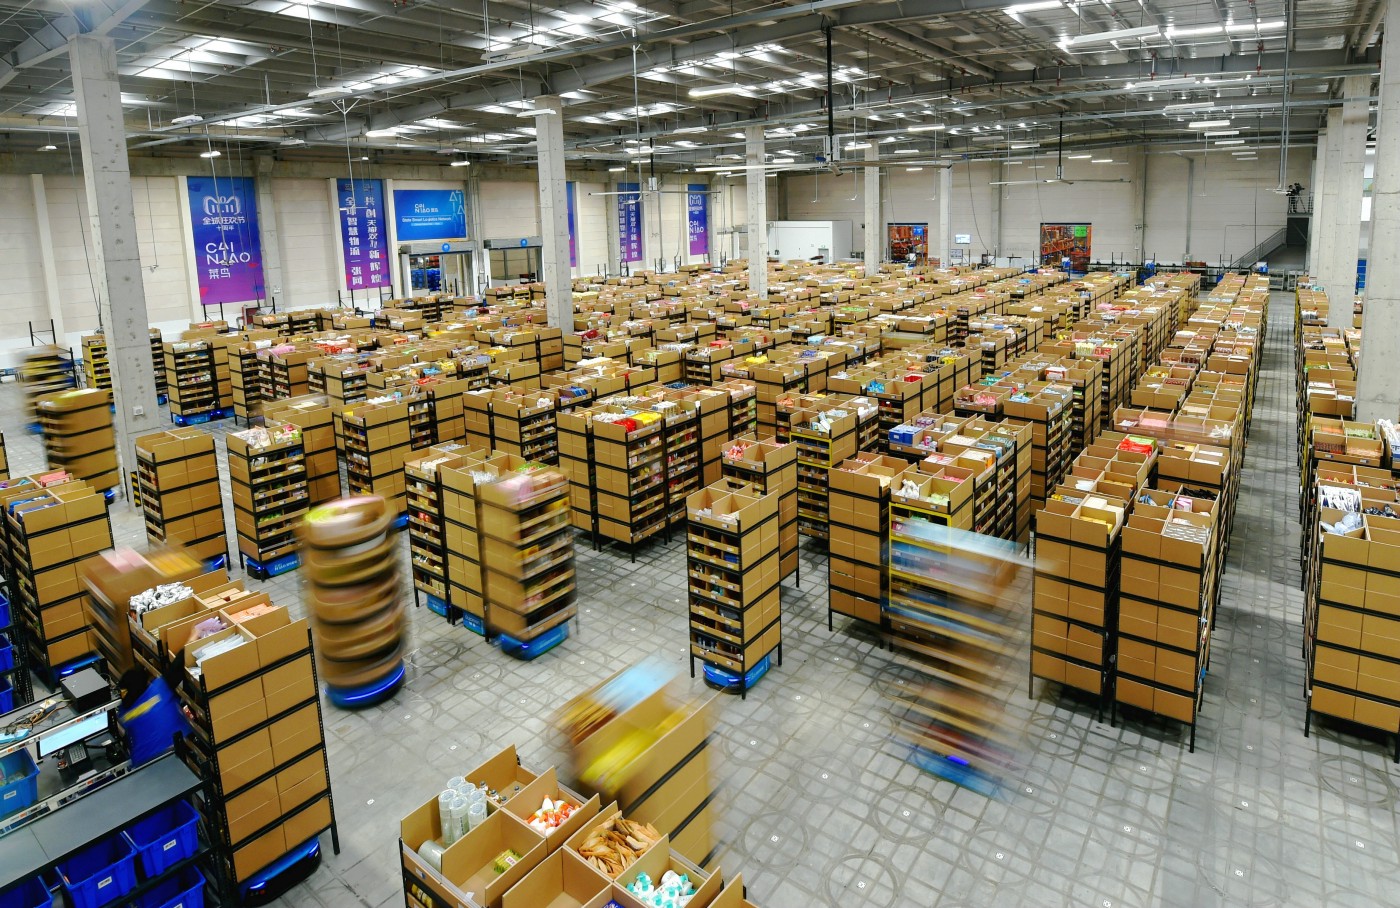 Cainiao automated warehouse